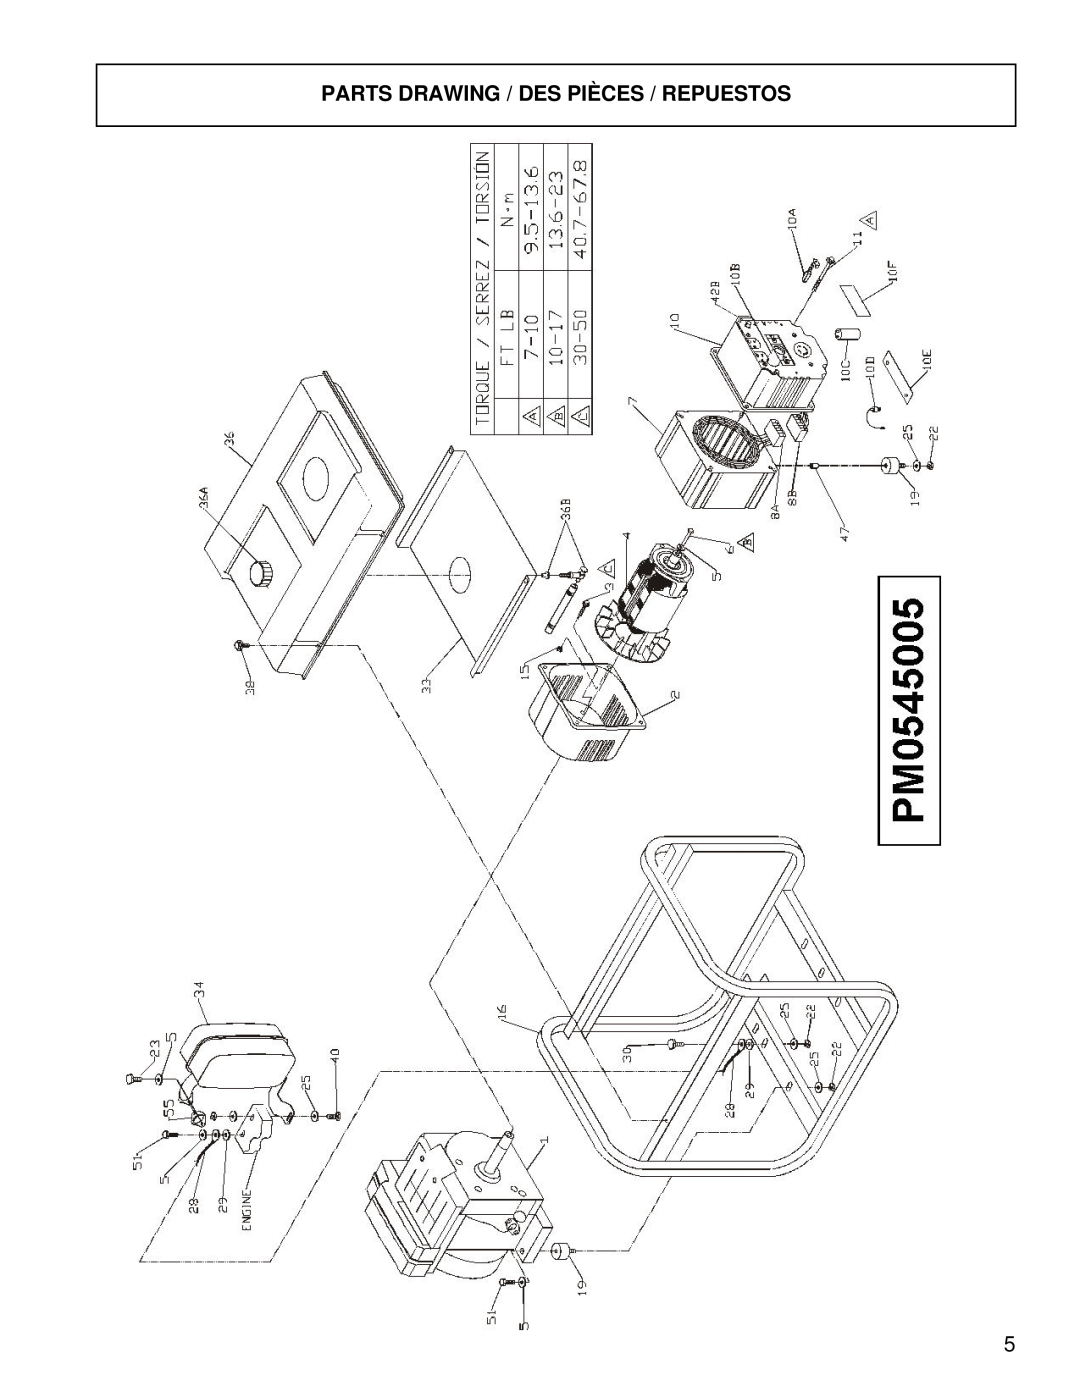 Powermate PM0545005 manual Parts Drawing / Des Pièces / Repuestos 